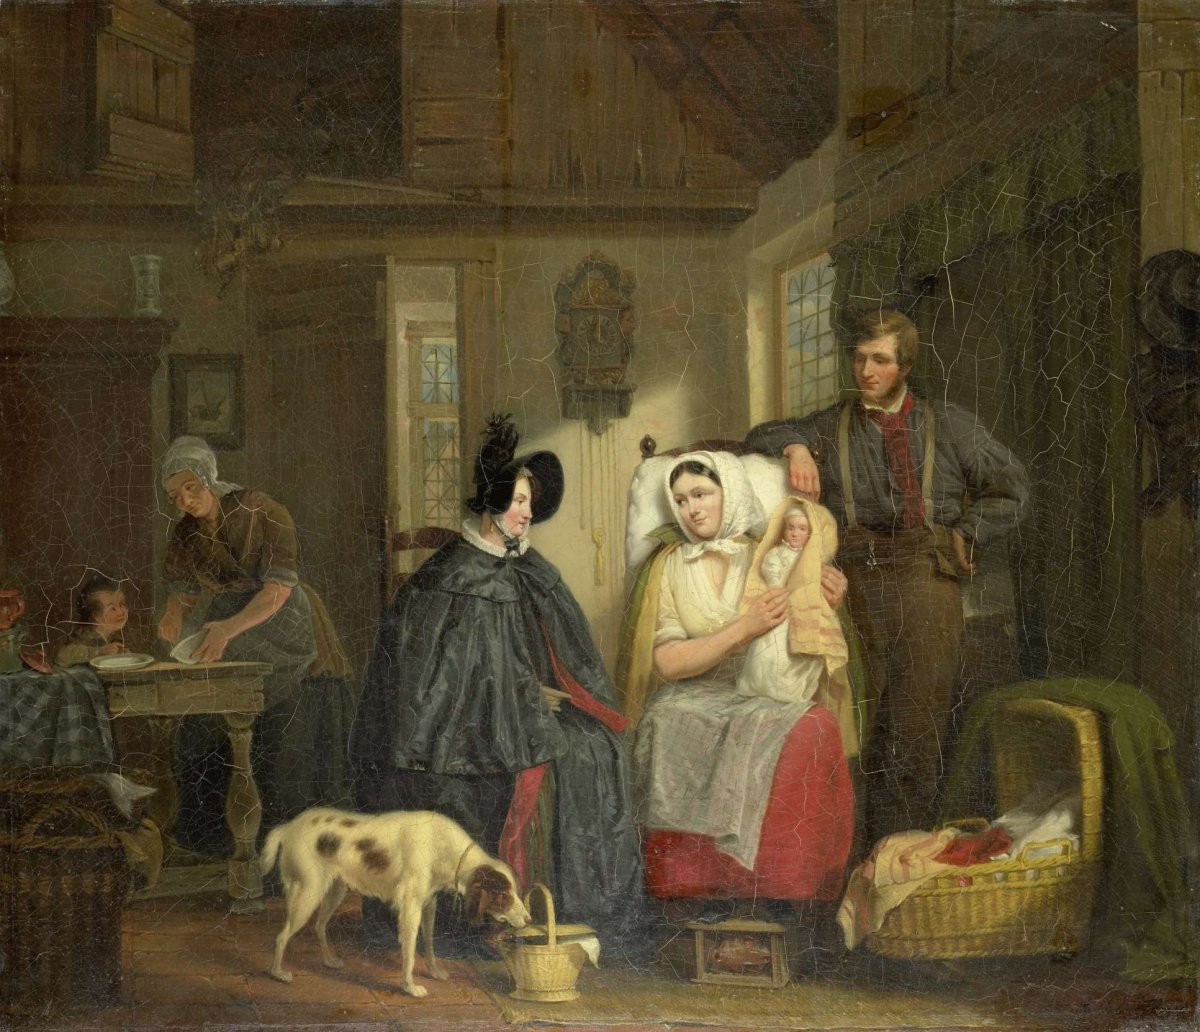 Visit to a New Mother, Moritz Calisch, 1835